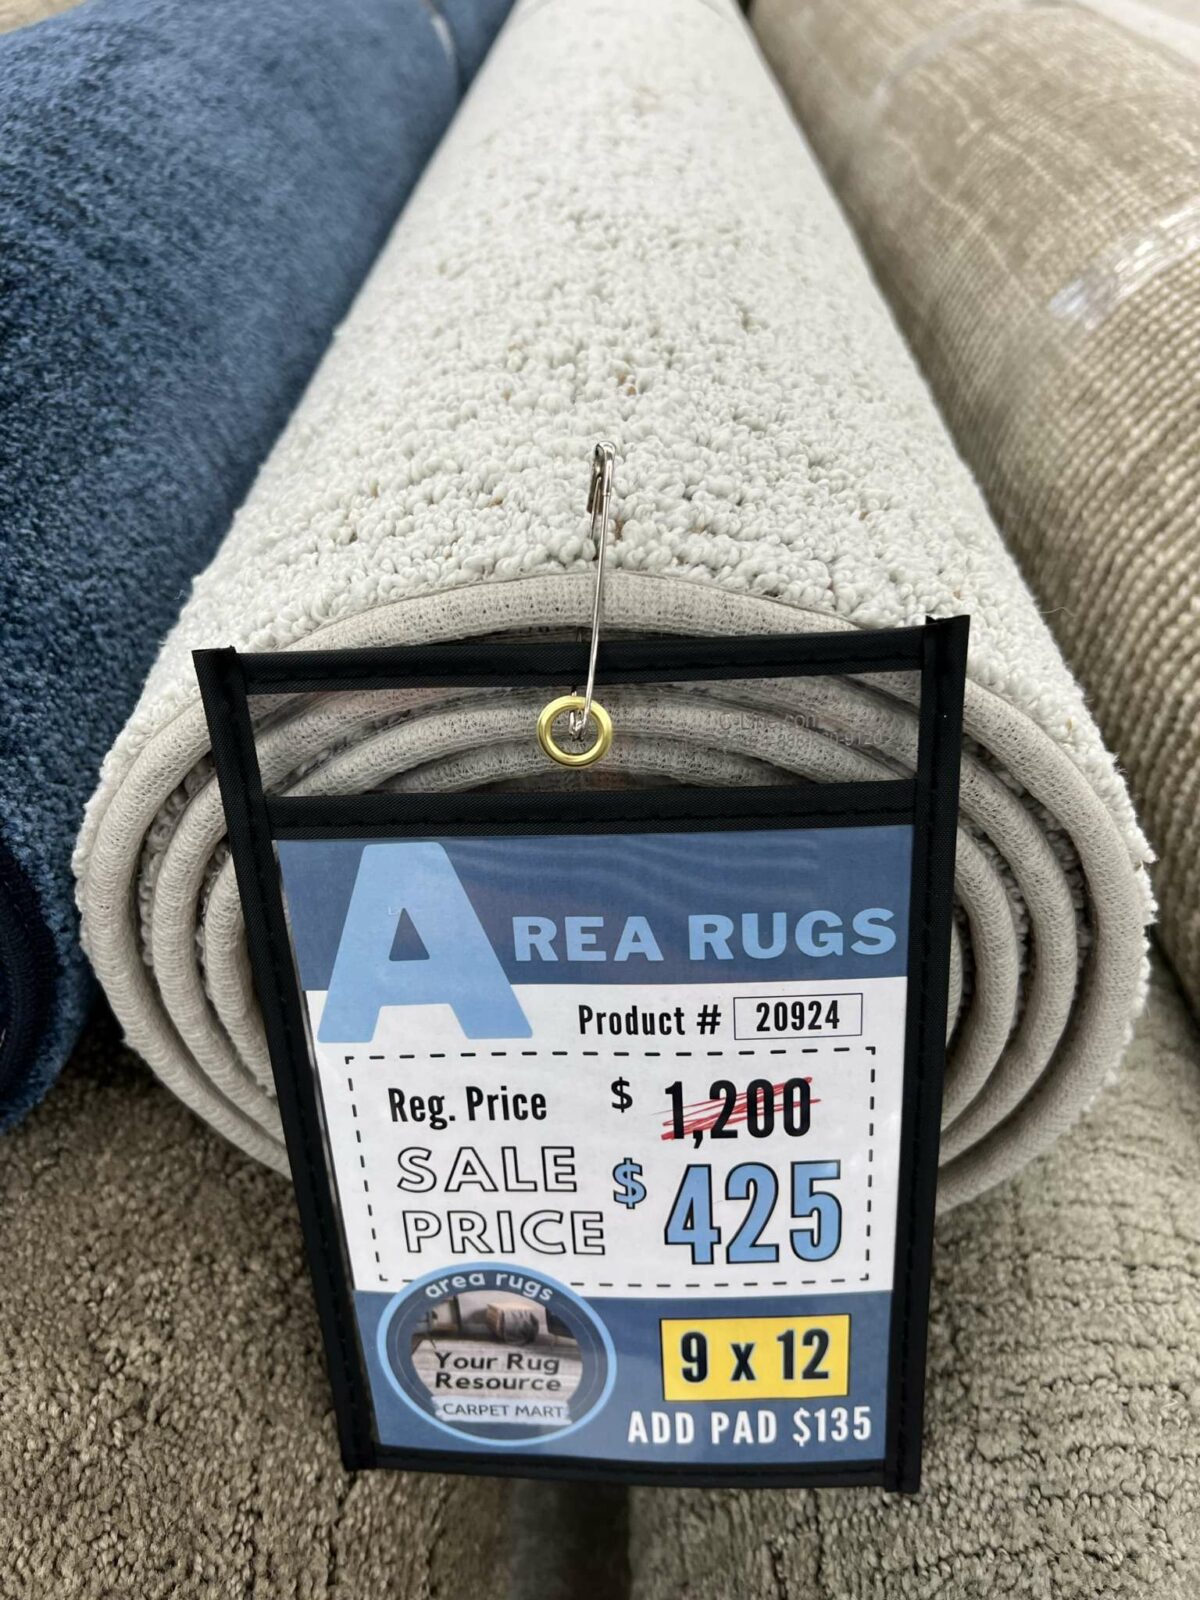 Area rugs | Carpet Mart